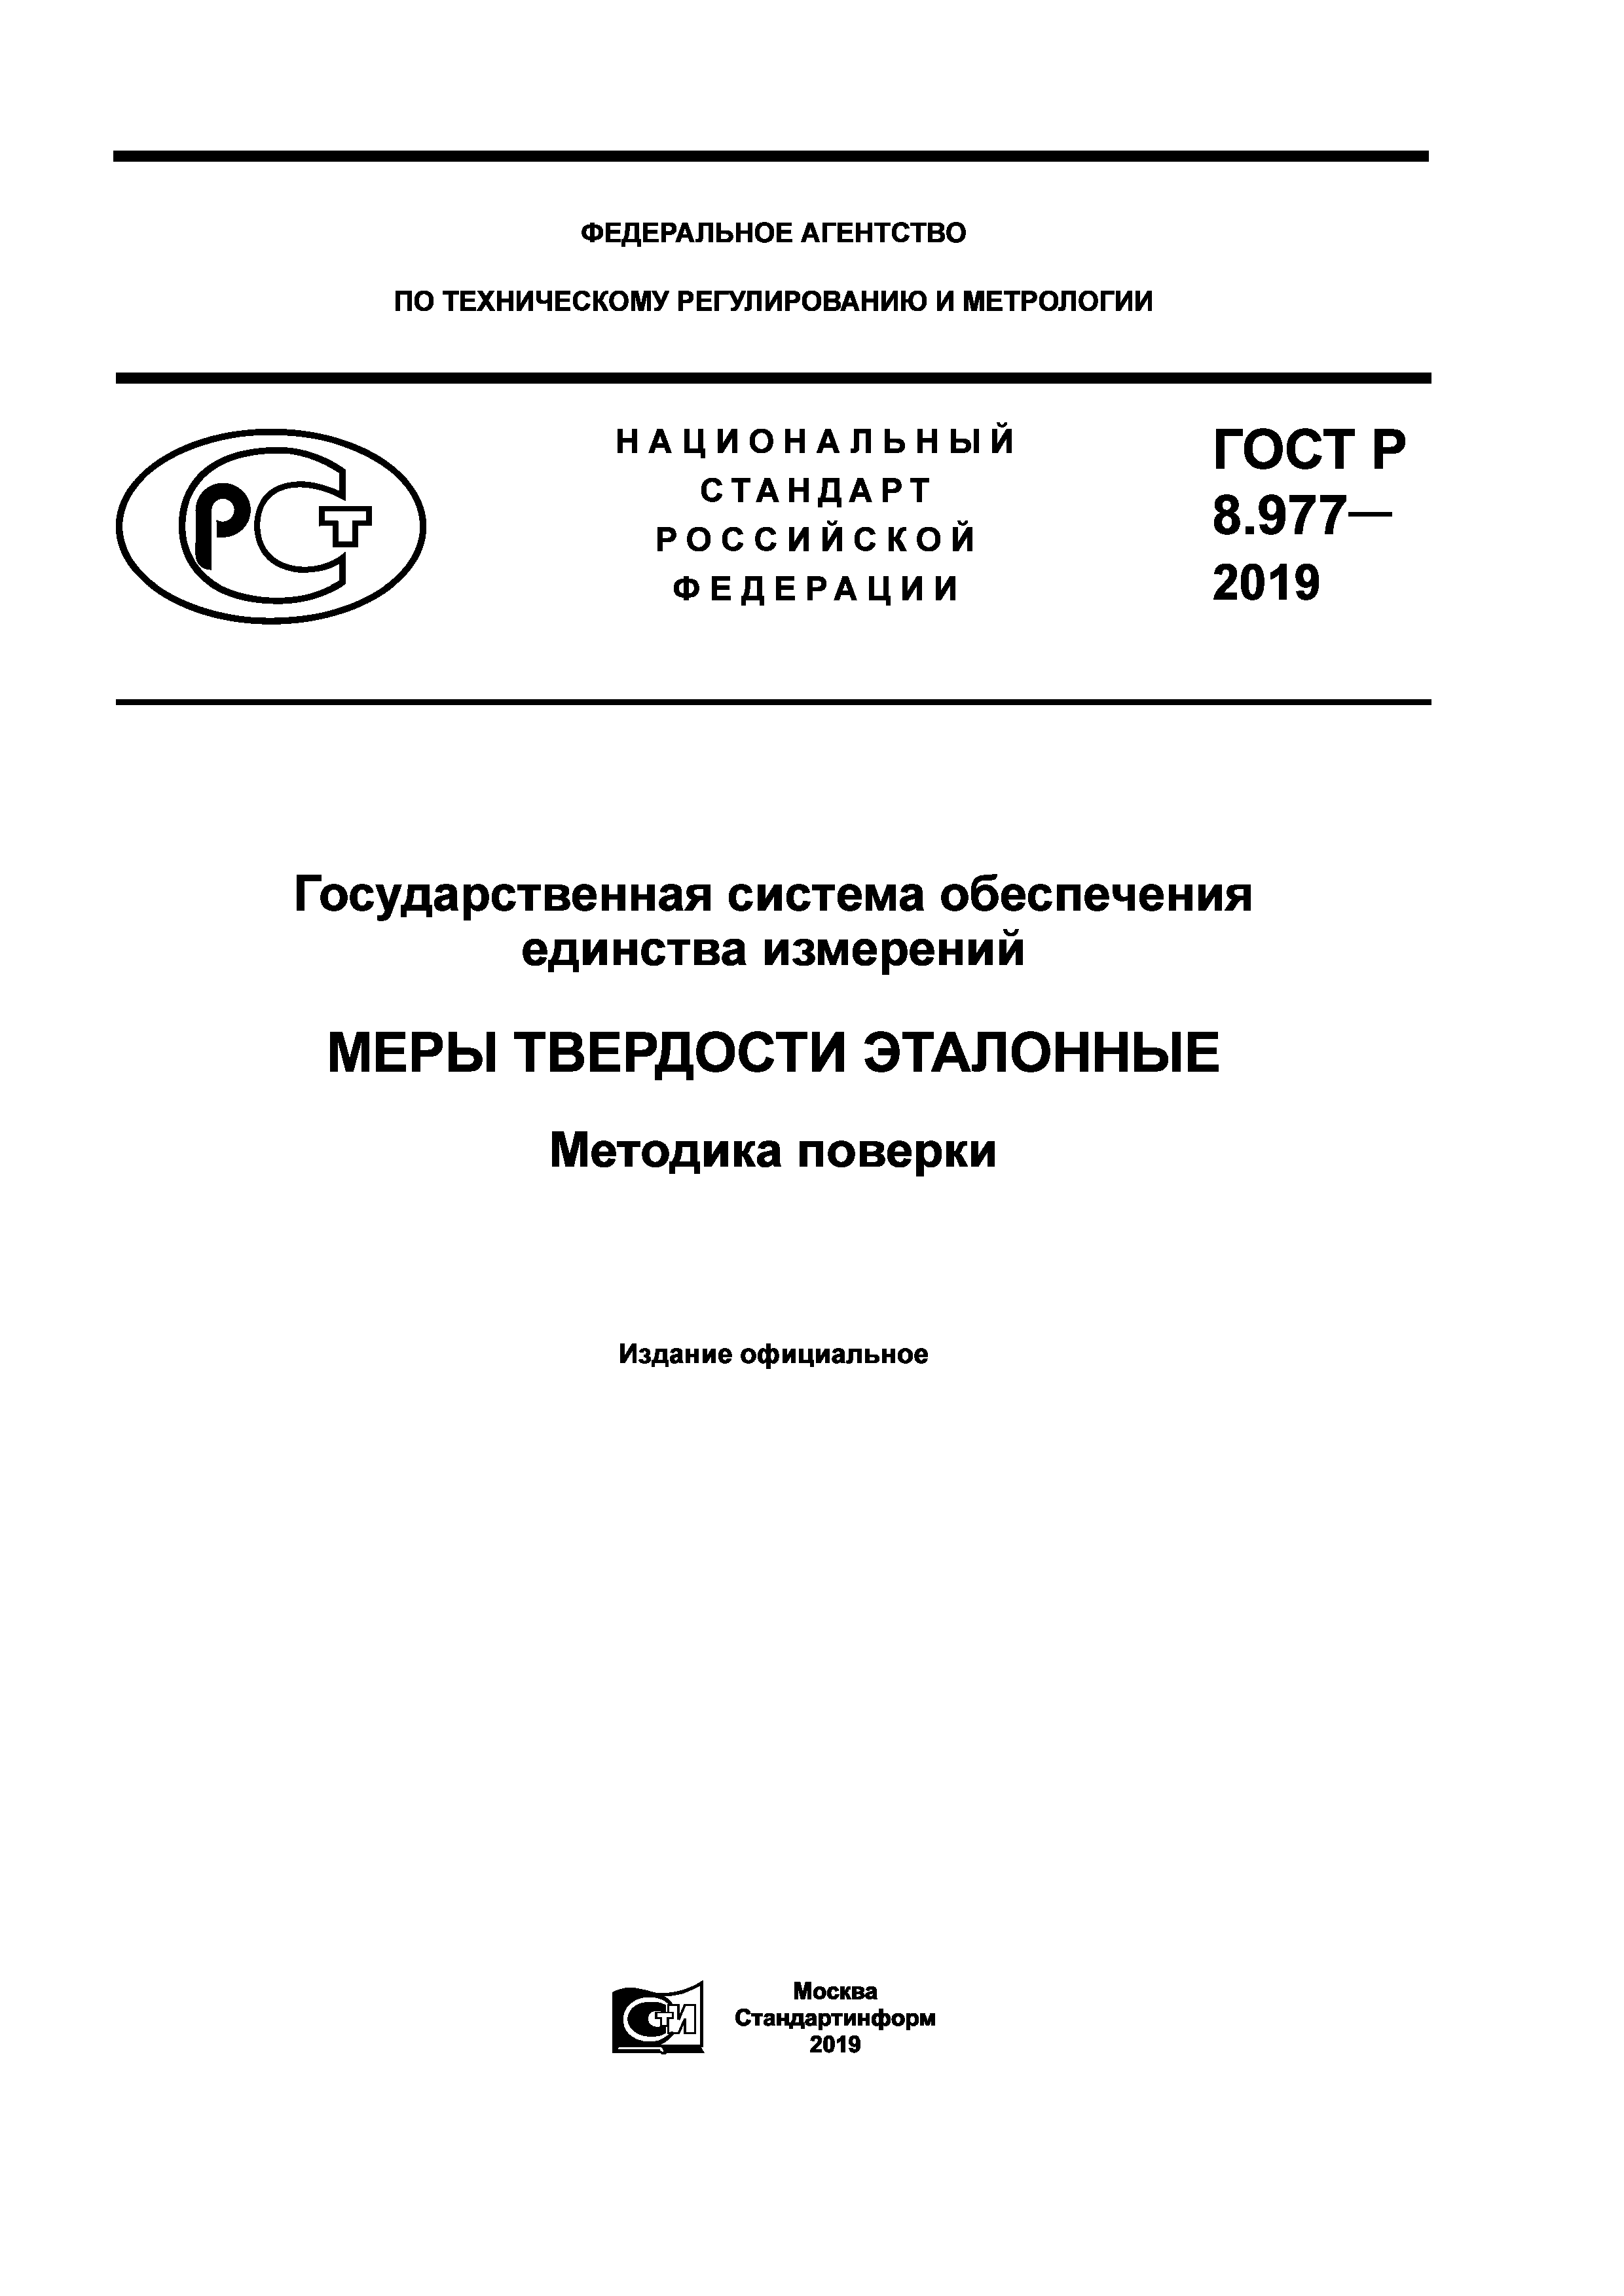 ГОСТ Р 8.977-2019